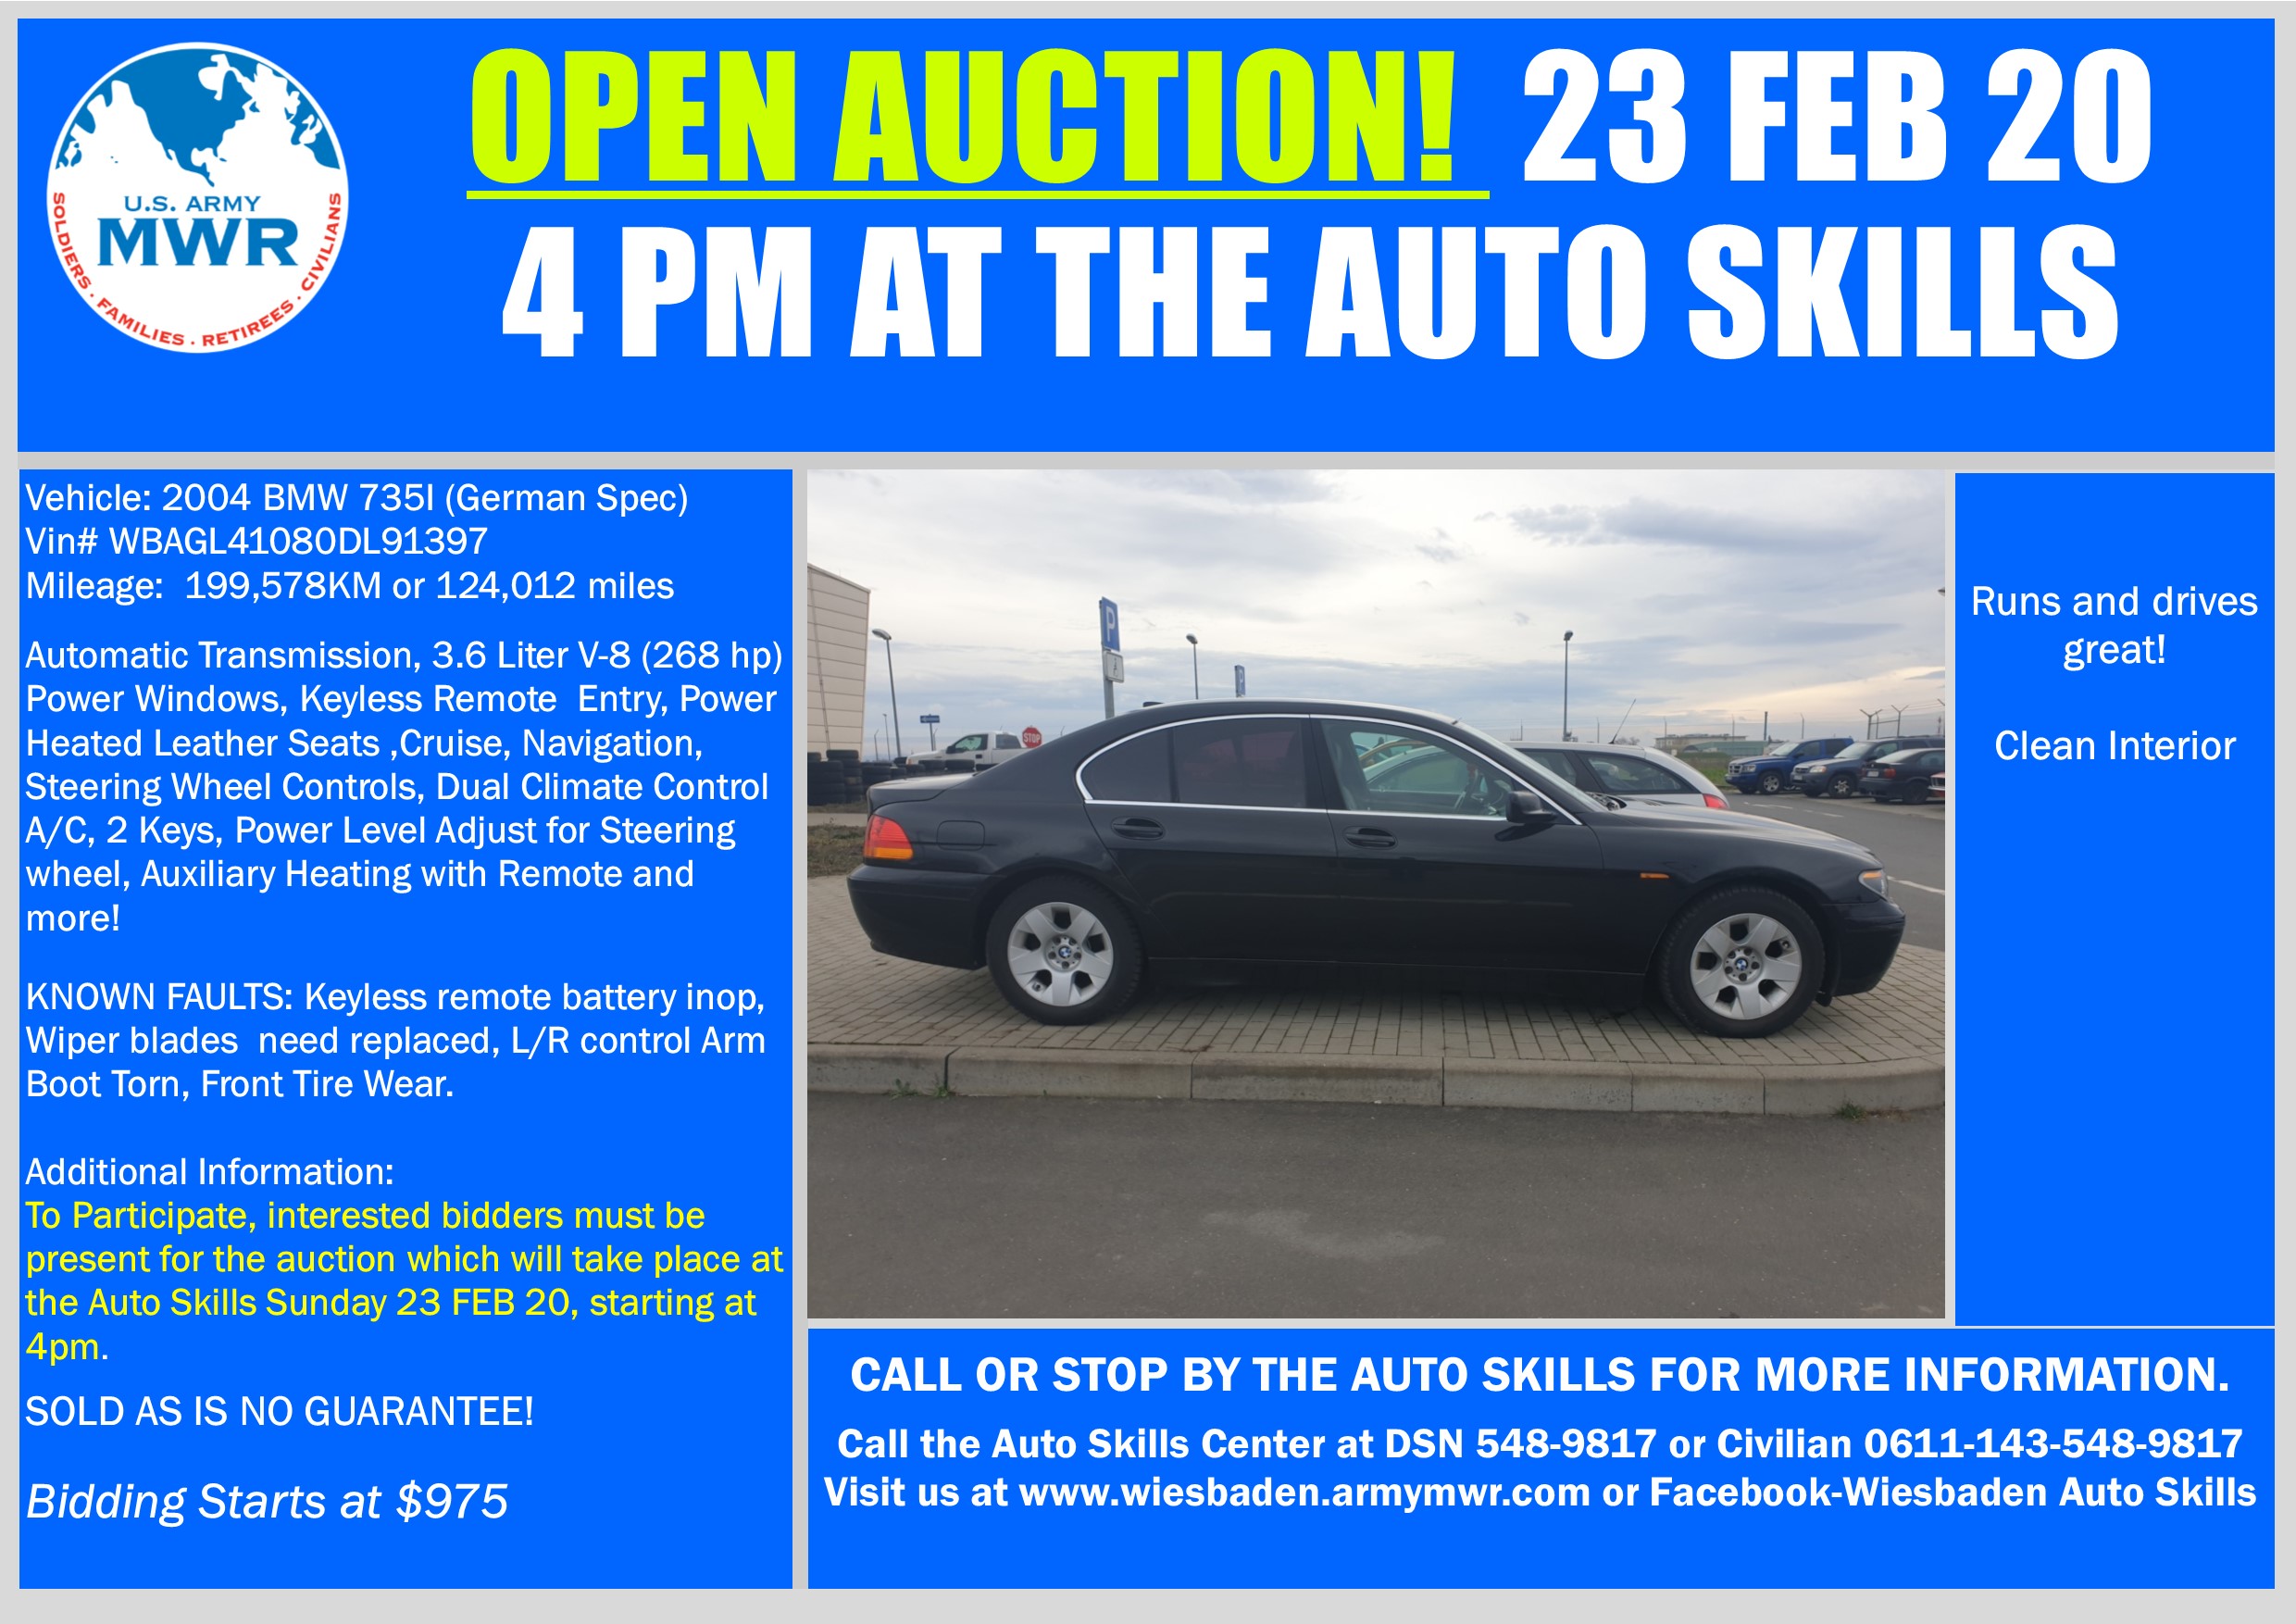 Sale BMW 735 Open Auction 23 Feb 20.jpg